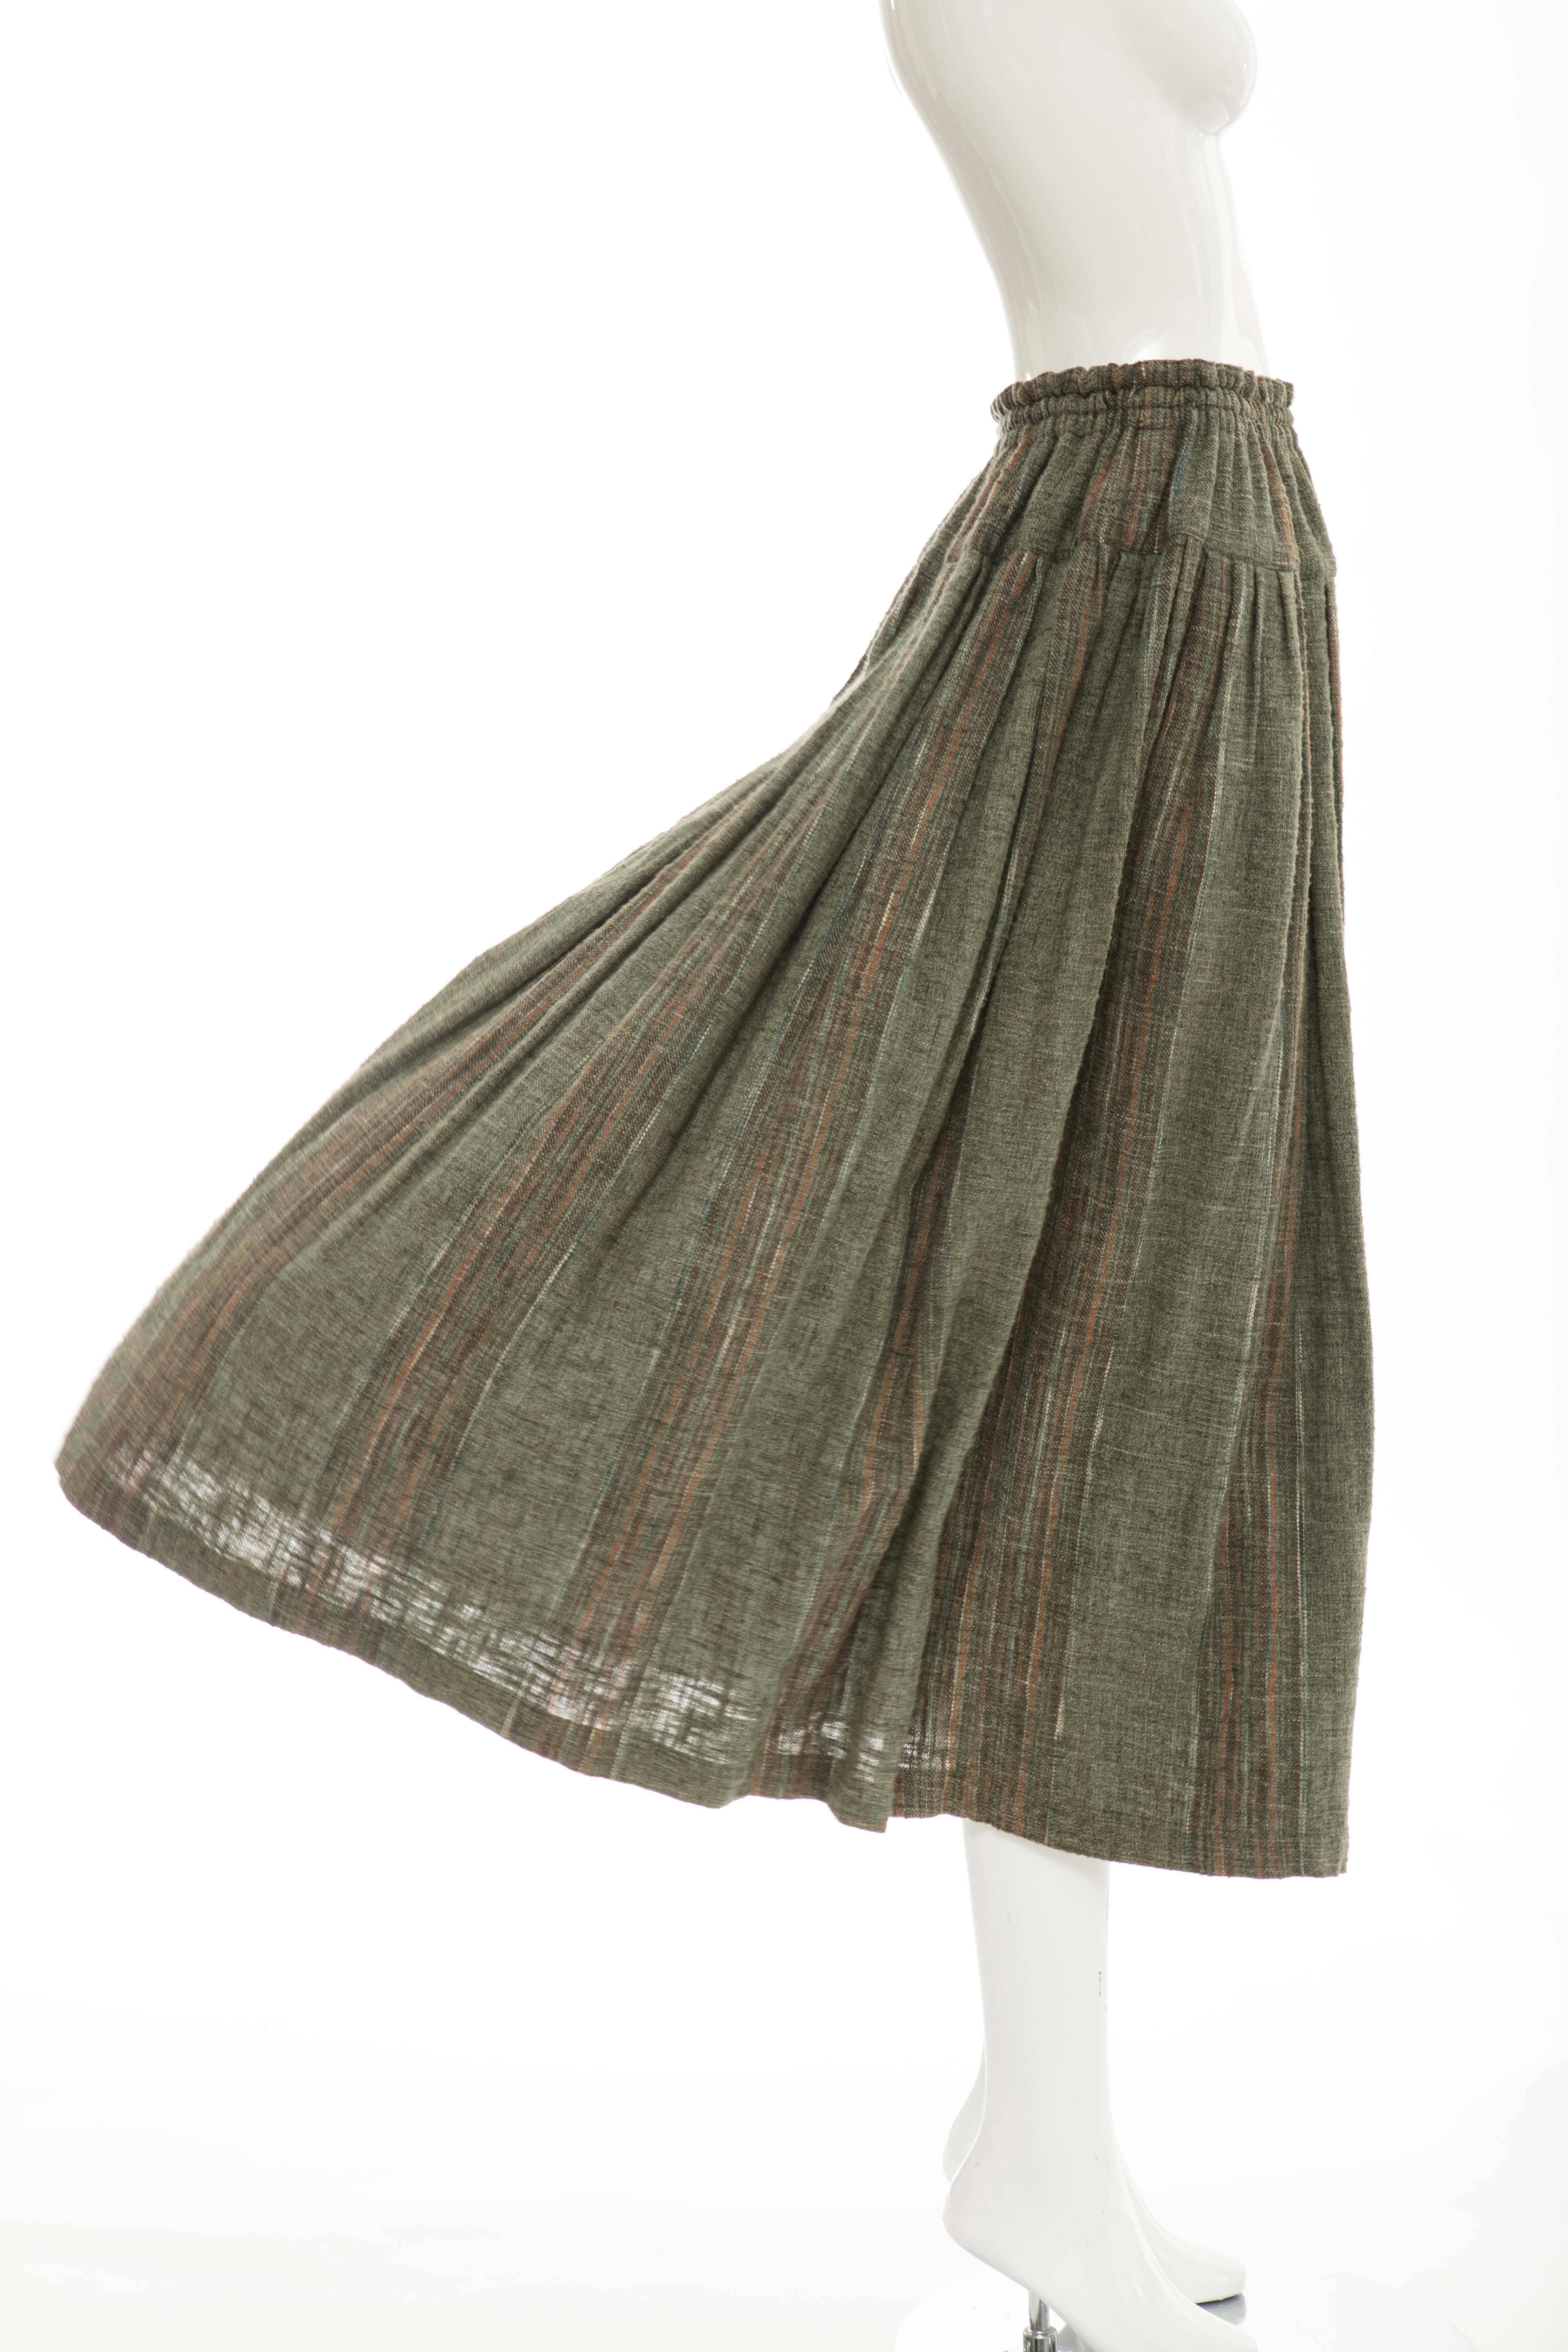 woven cotton skirts